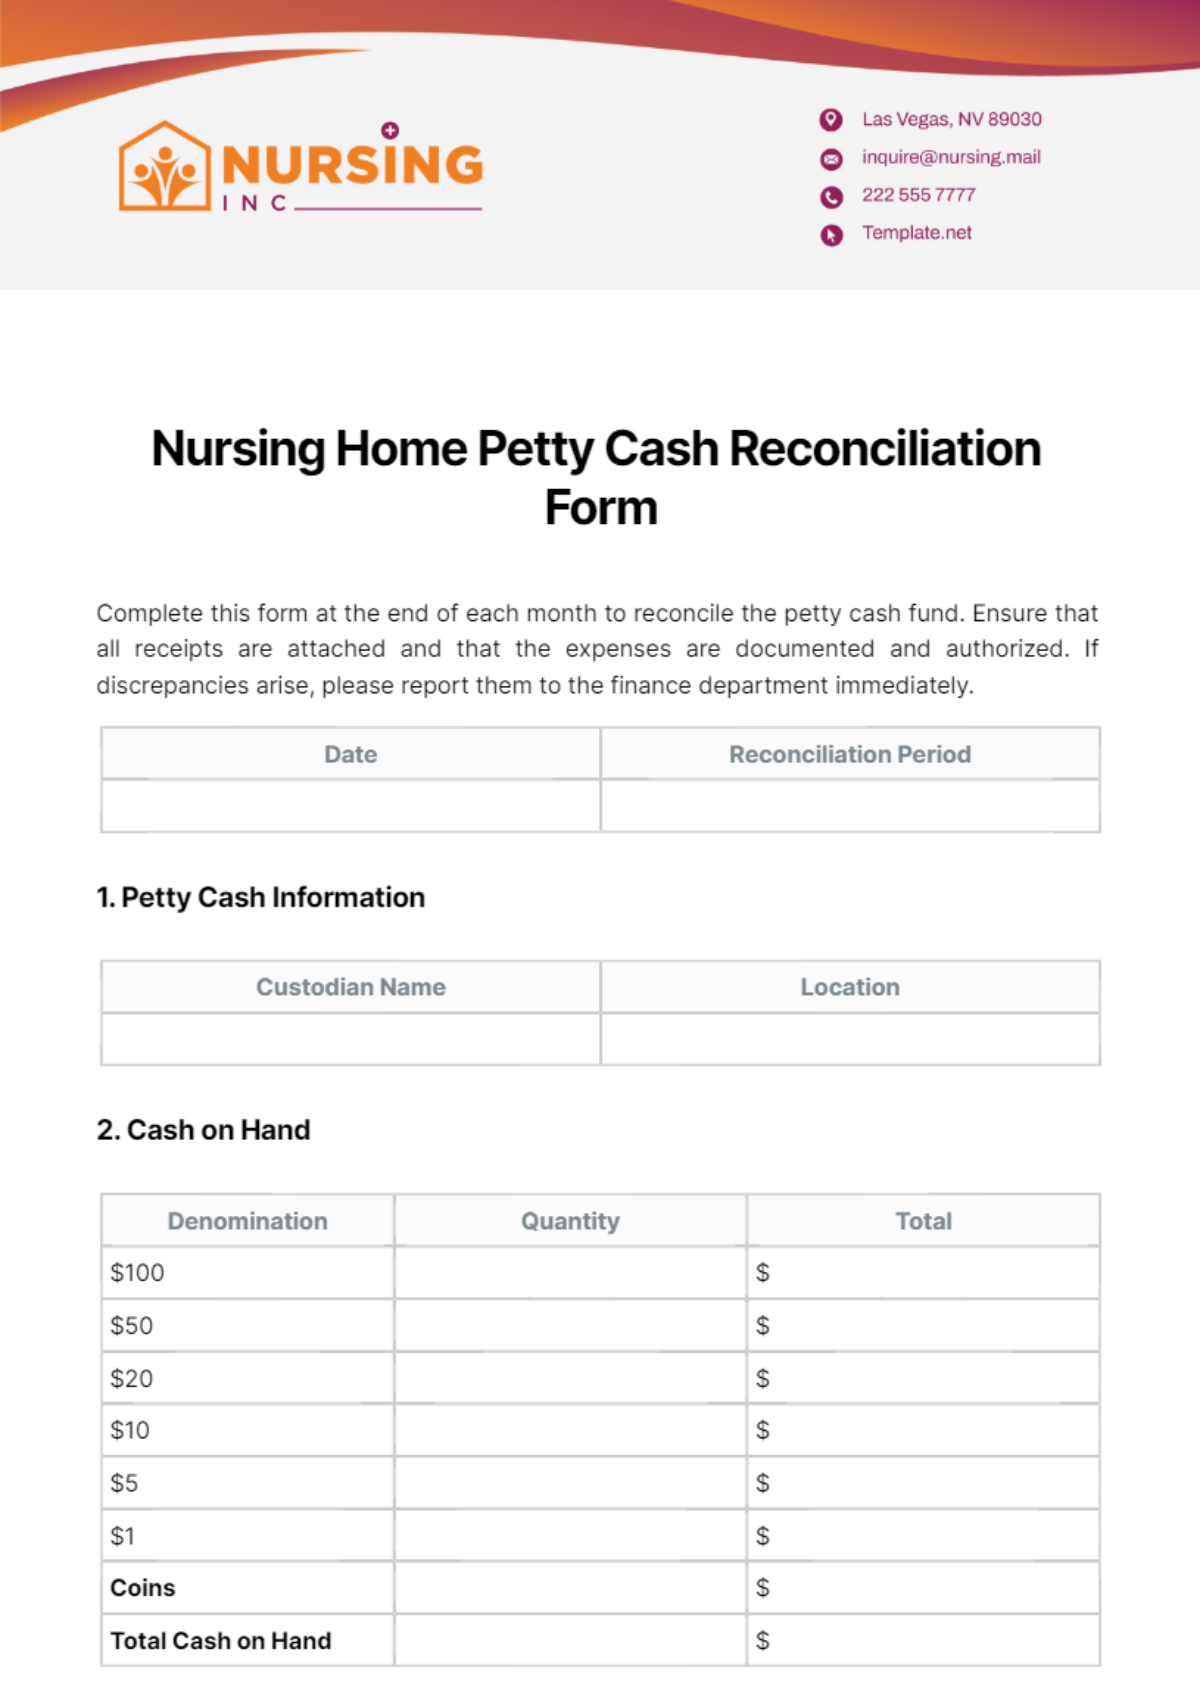 Nursing Home Petty Cash Reconciliation Form Template